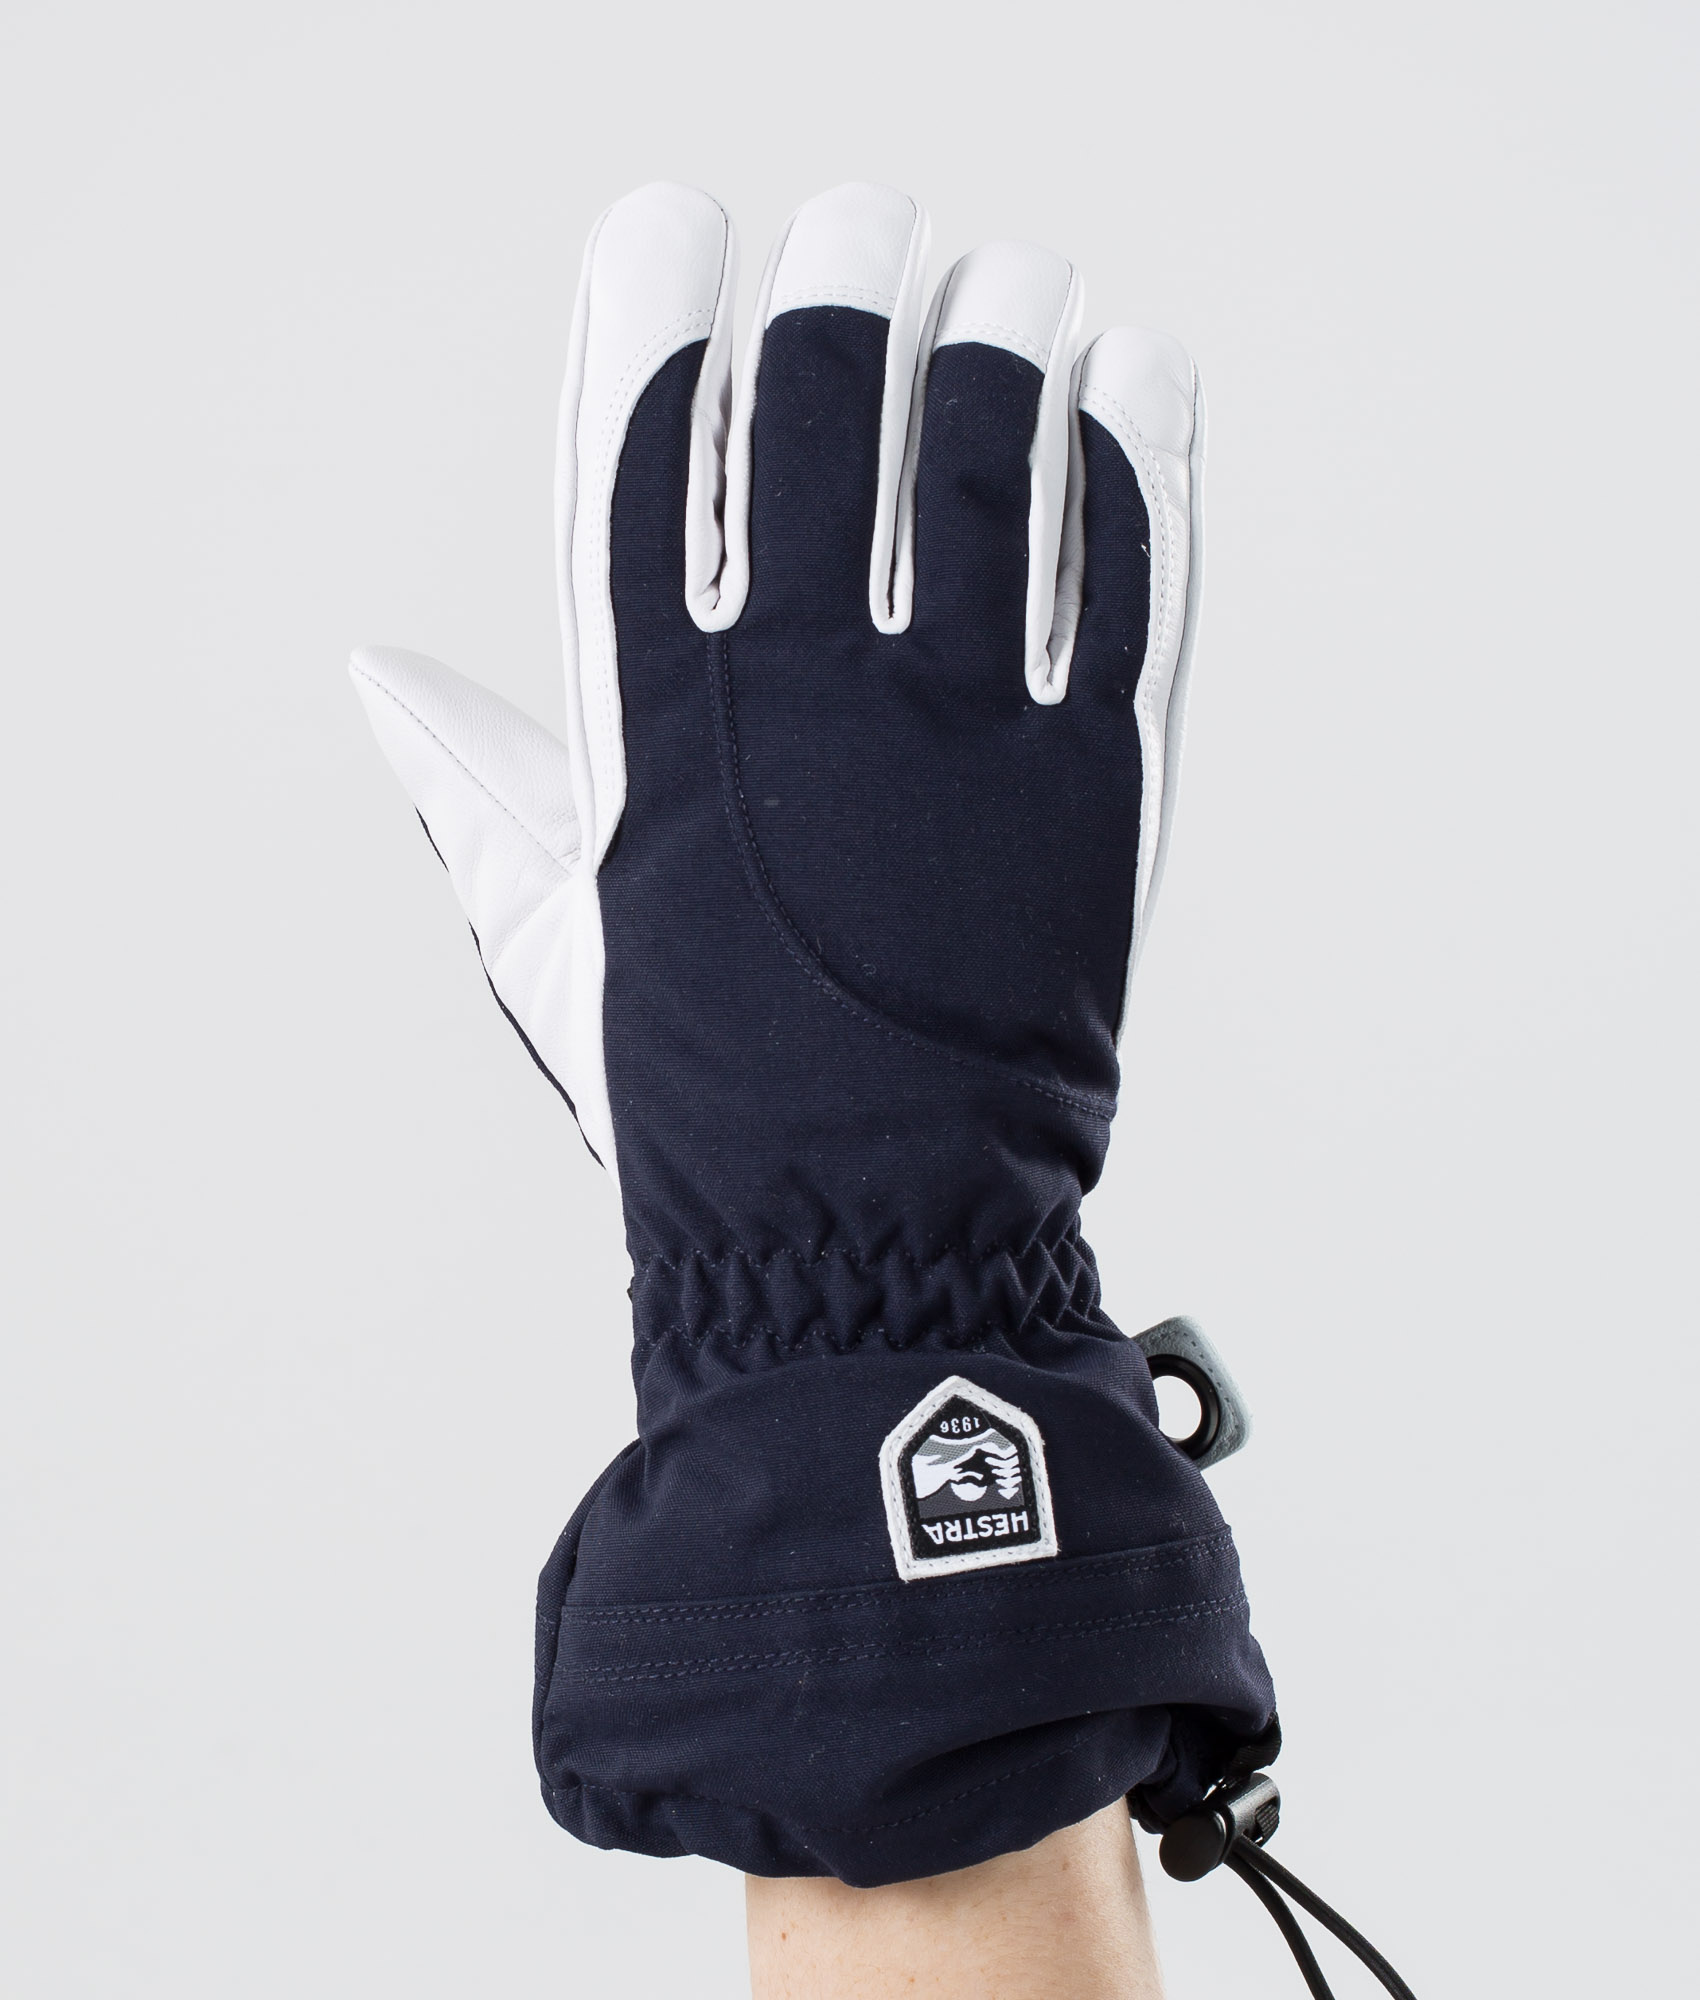 Details about   Hestra Heli Ski Female 5 Finger Ski and Snowboard Gloves In Navy 